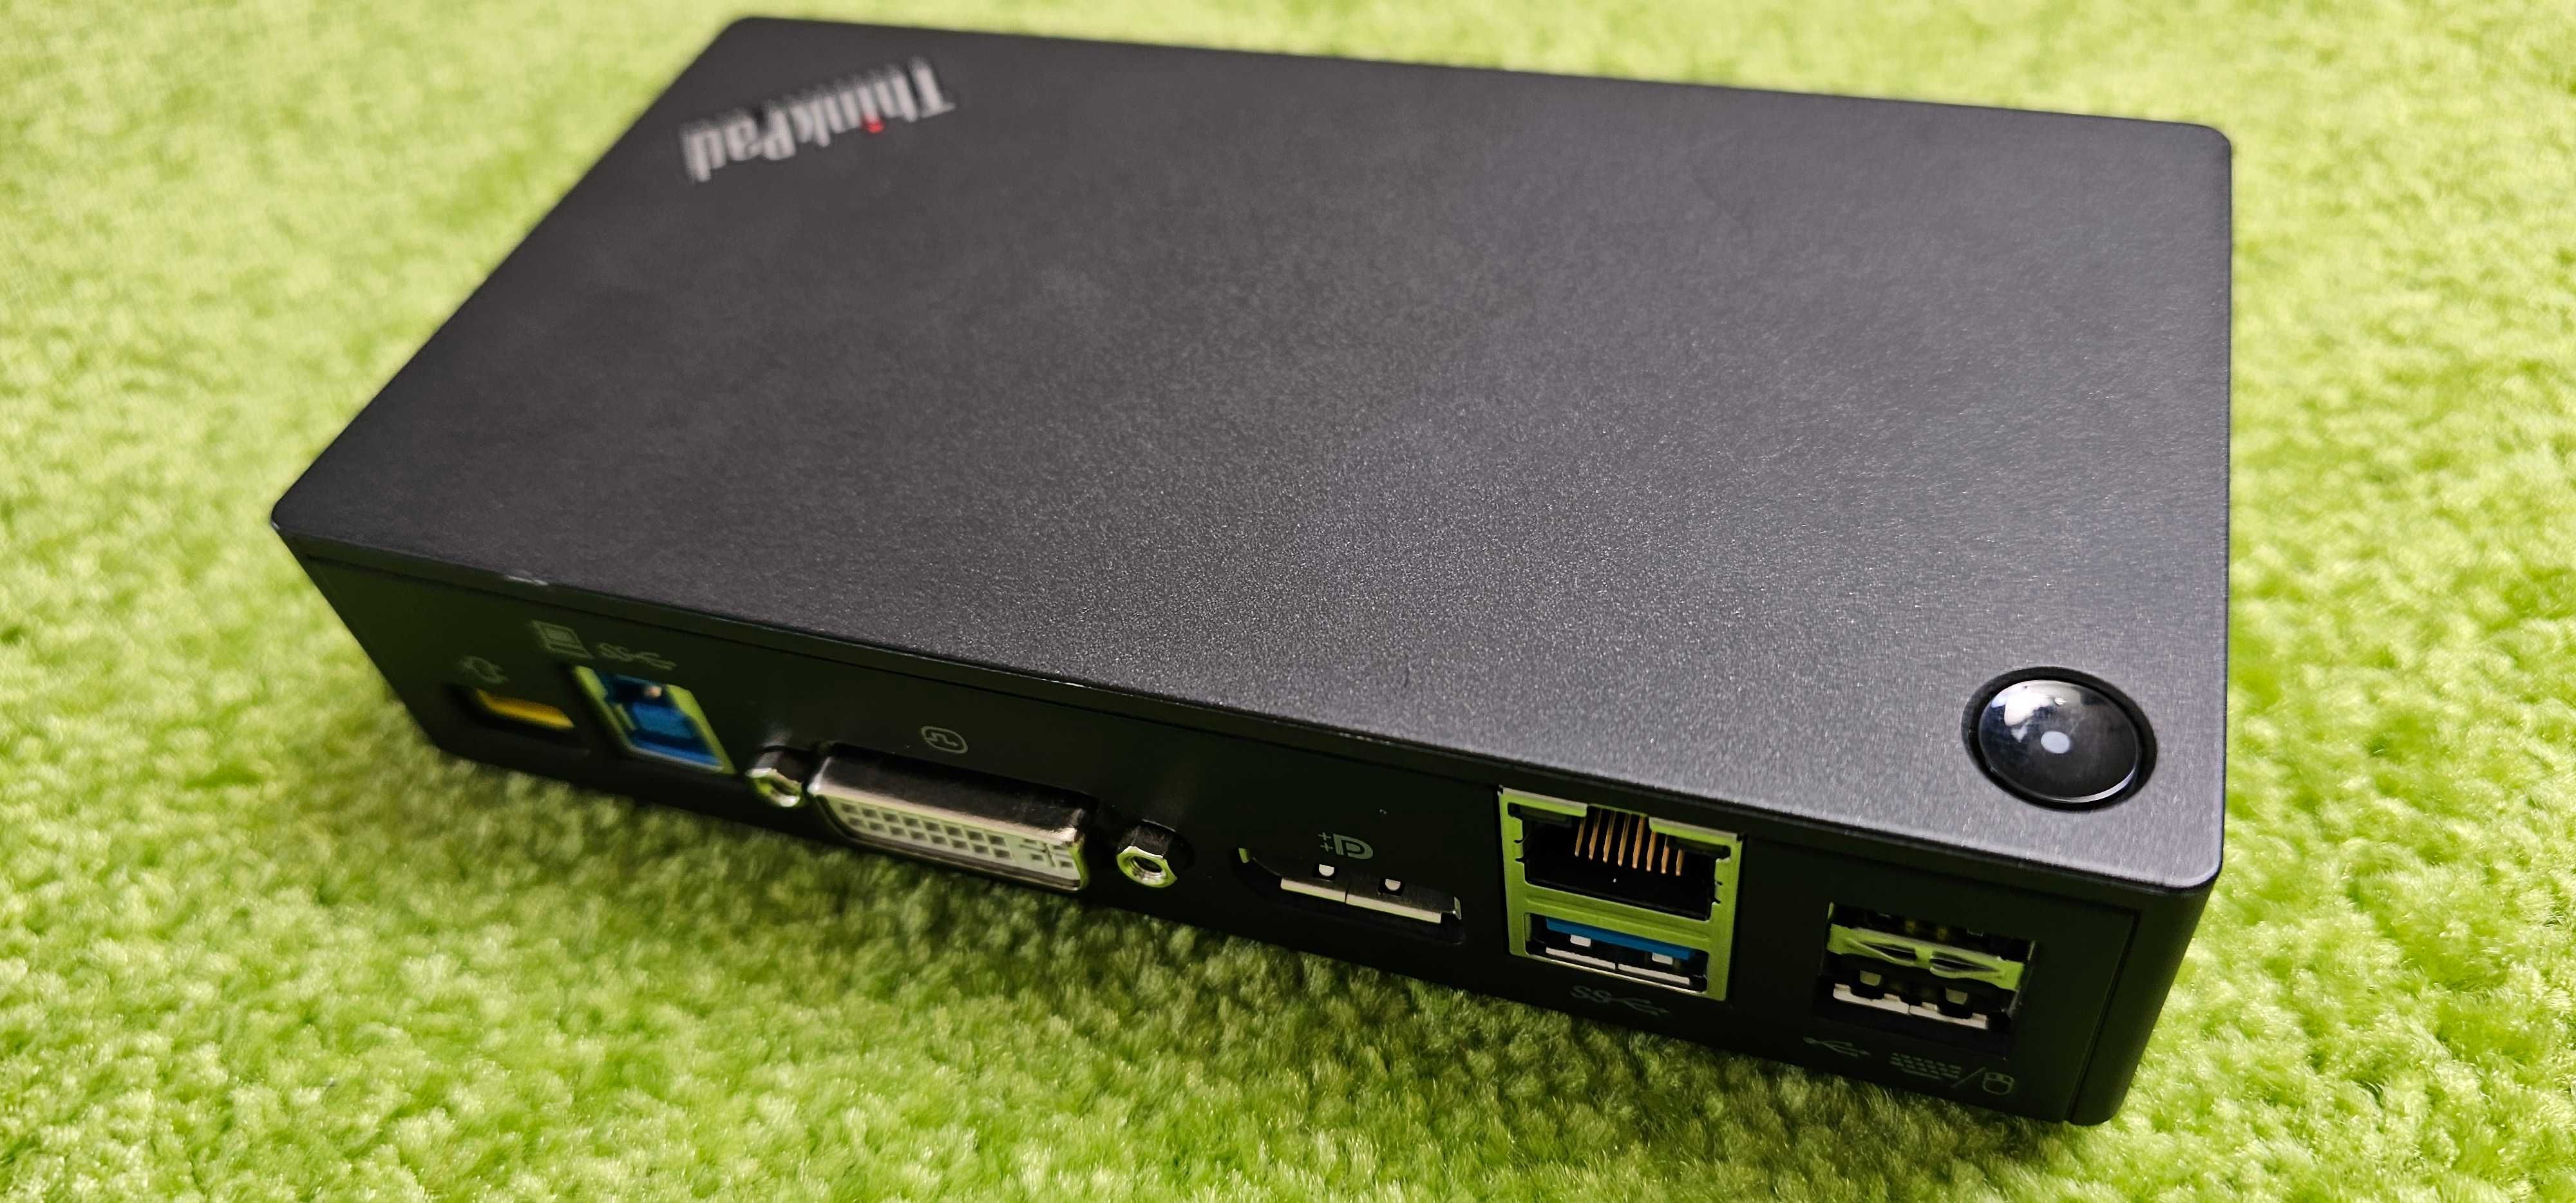 Stacja dokująca Lenovo ThinkPad USB 3.0 Pro Dock 40A7 + gratisy